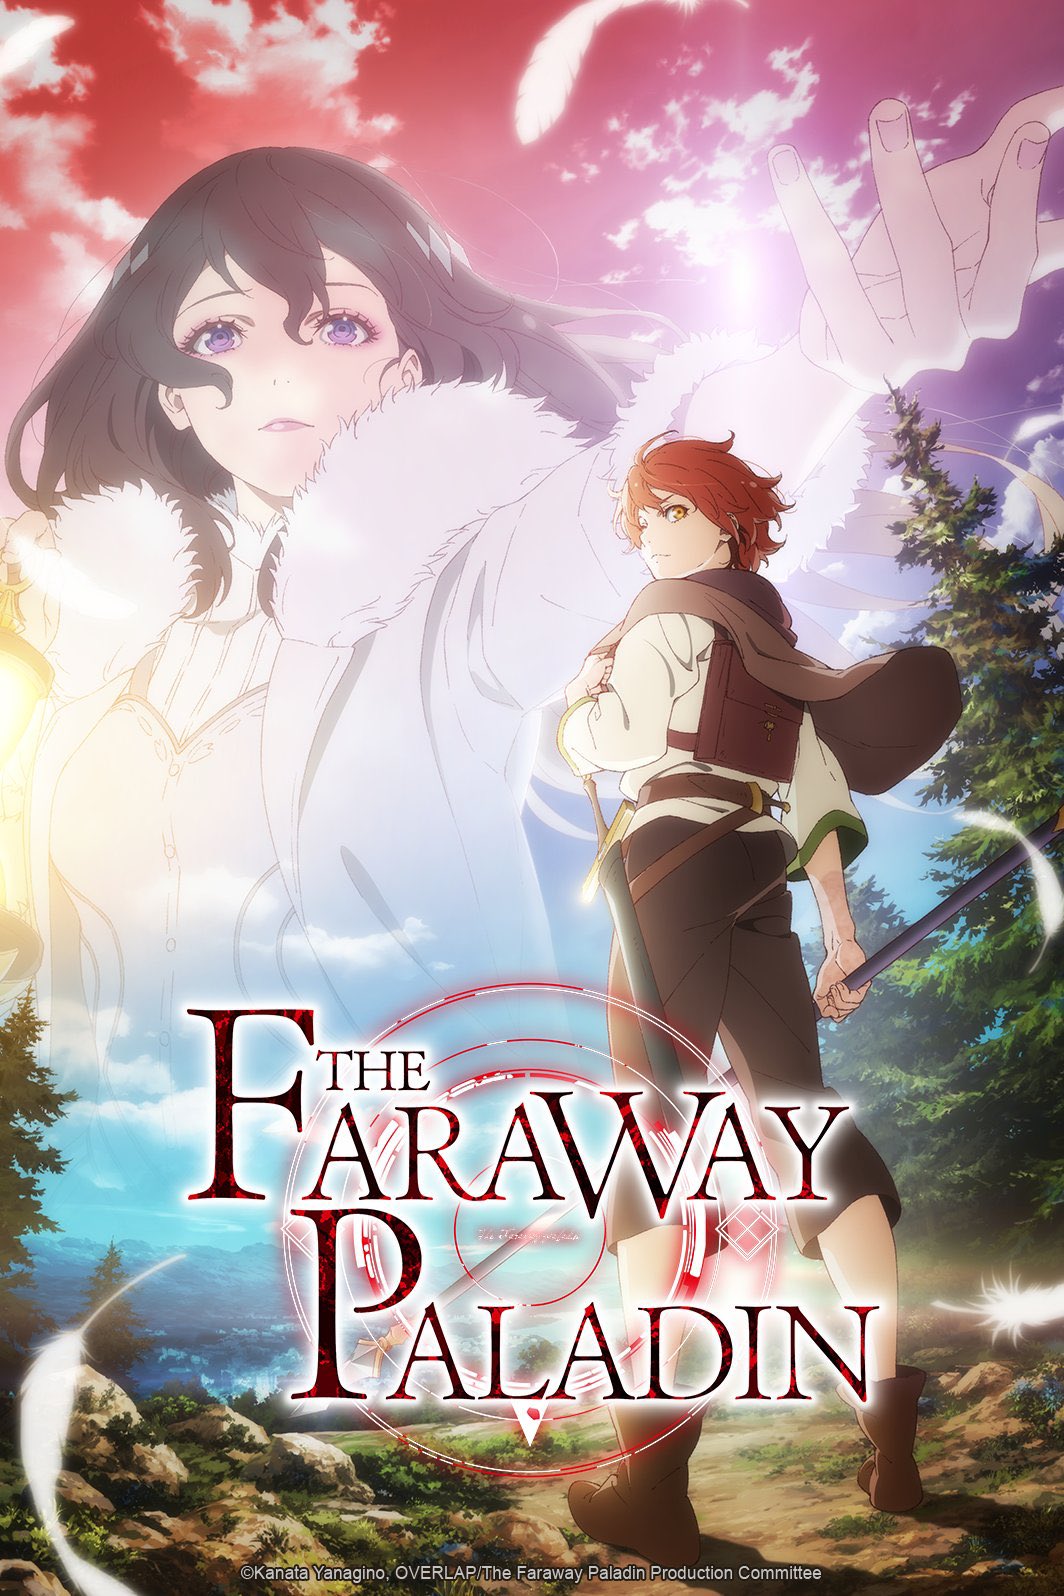 isekai anime fall 2021 - the faraway paladin